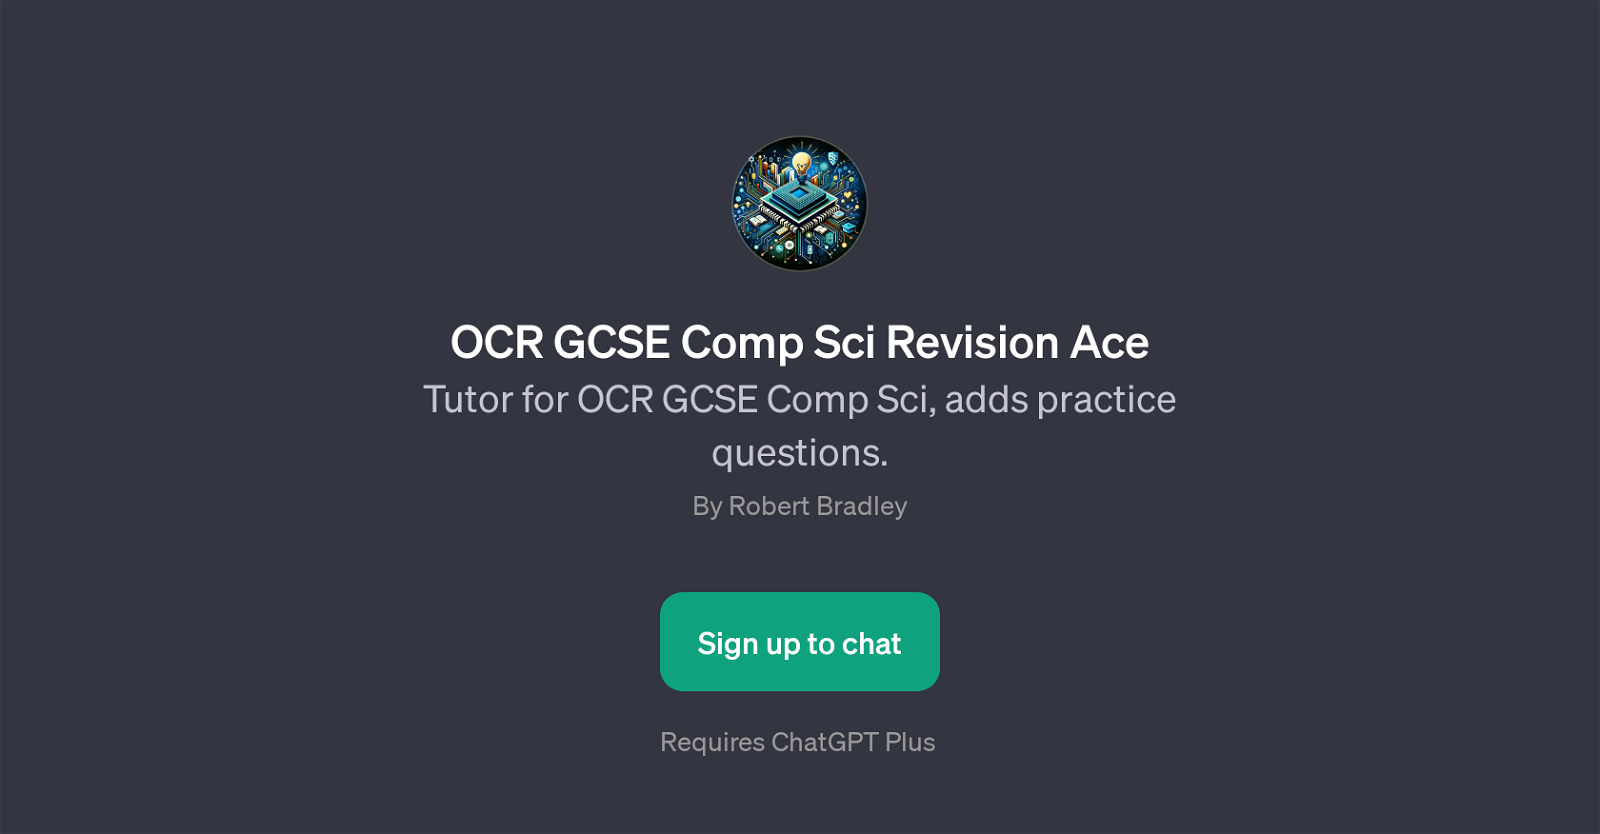 OCR GCSE Comp Sci Revision Ace website